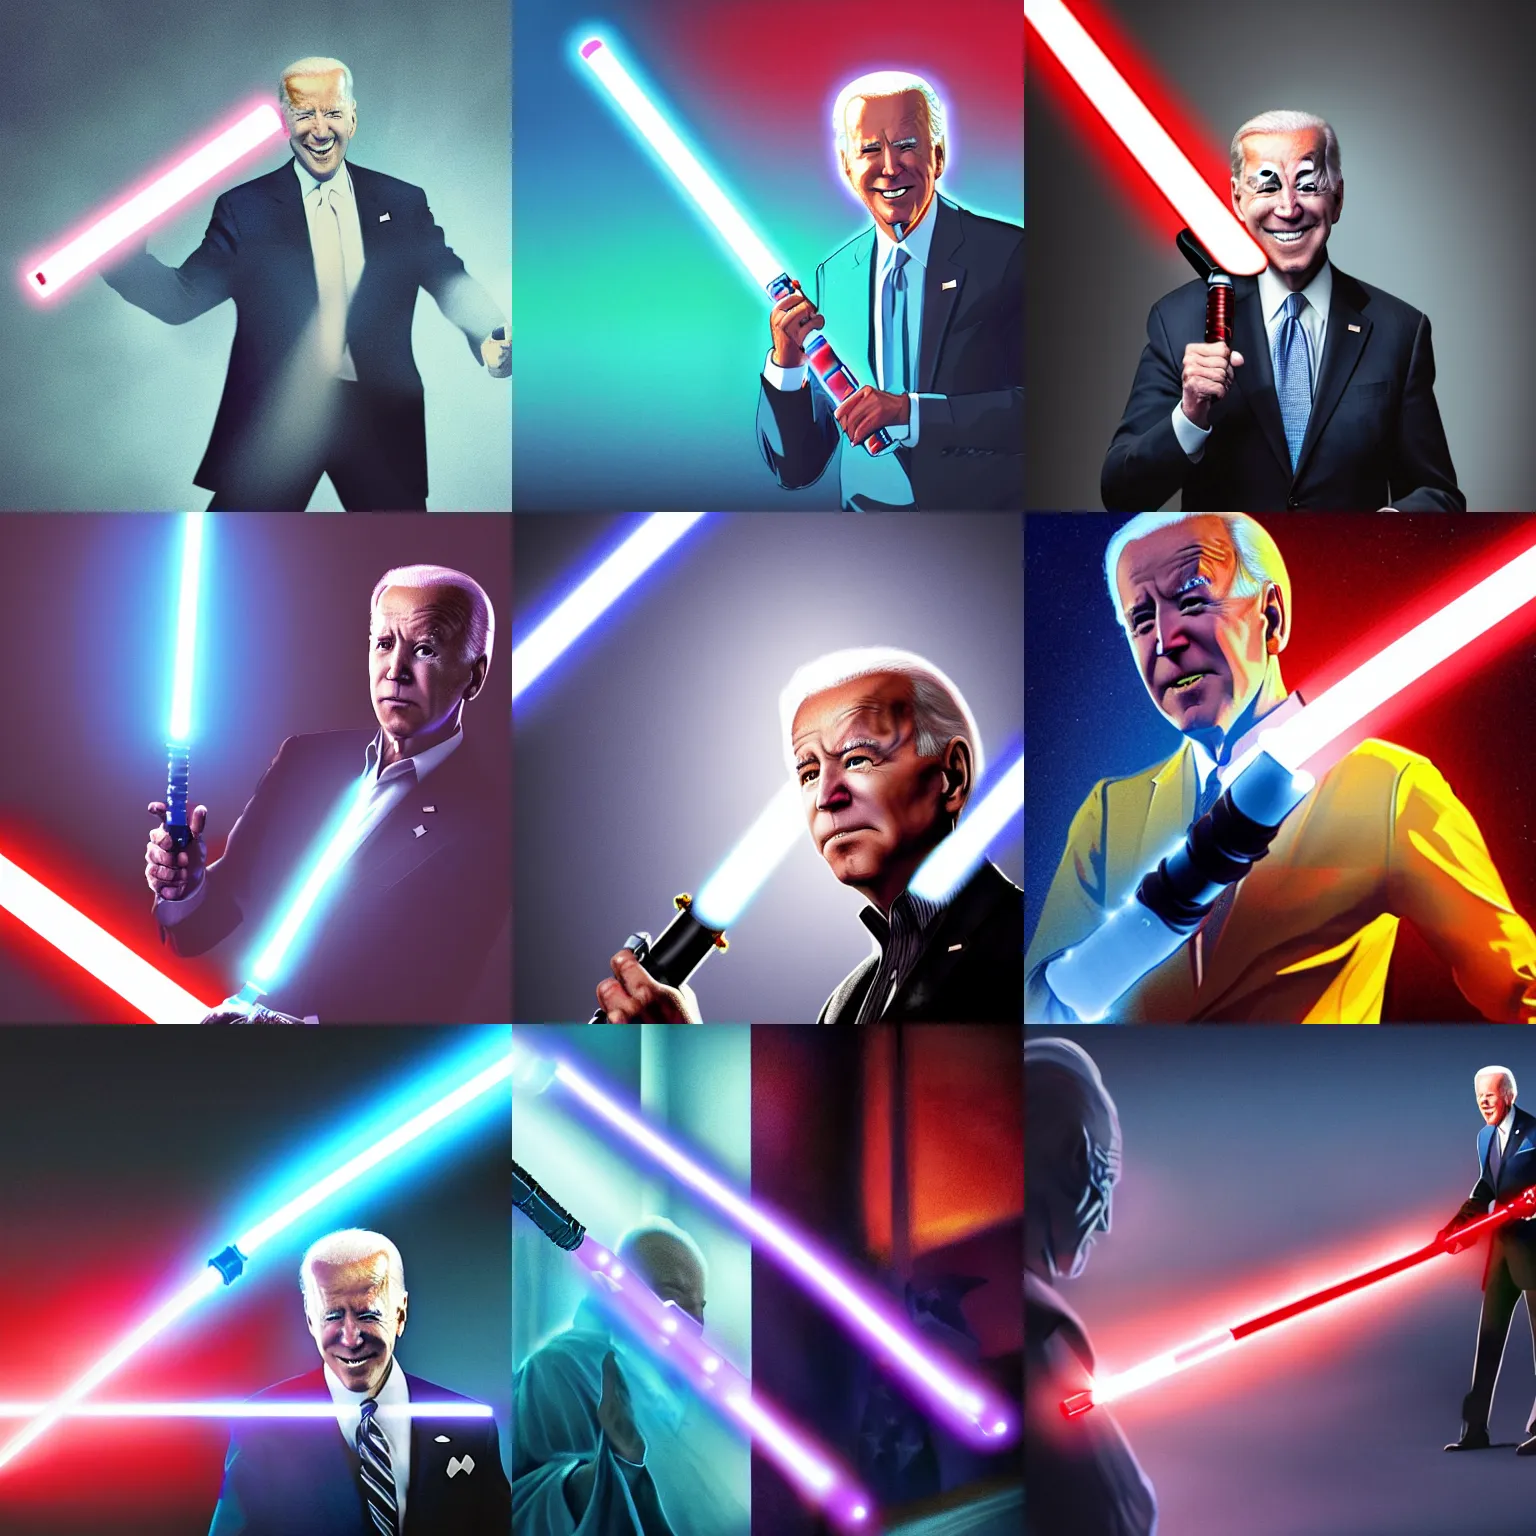 Prompt: Joe Biden using a light saber, epic, awesome, digital art, lighting, color harmony, volumetric lighting